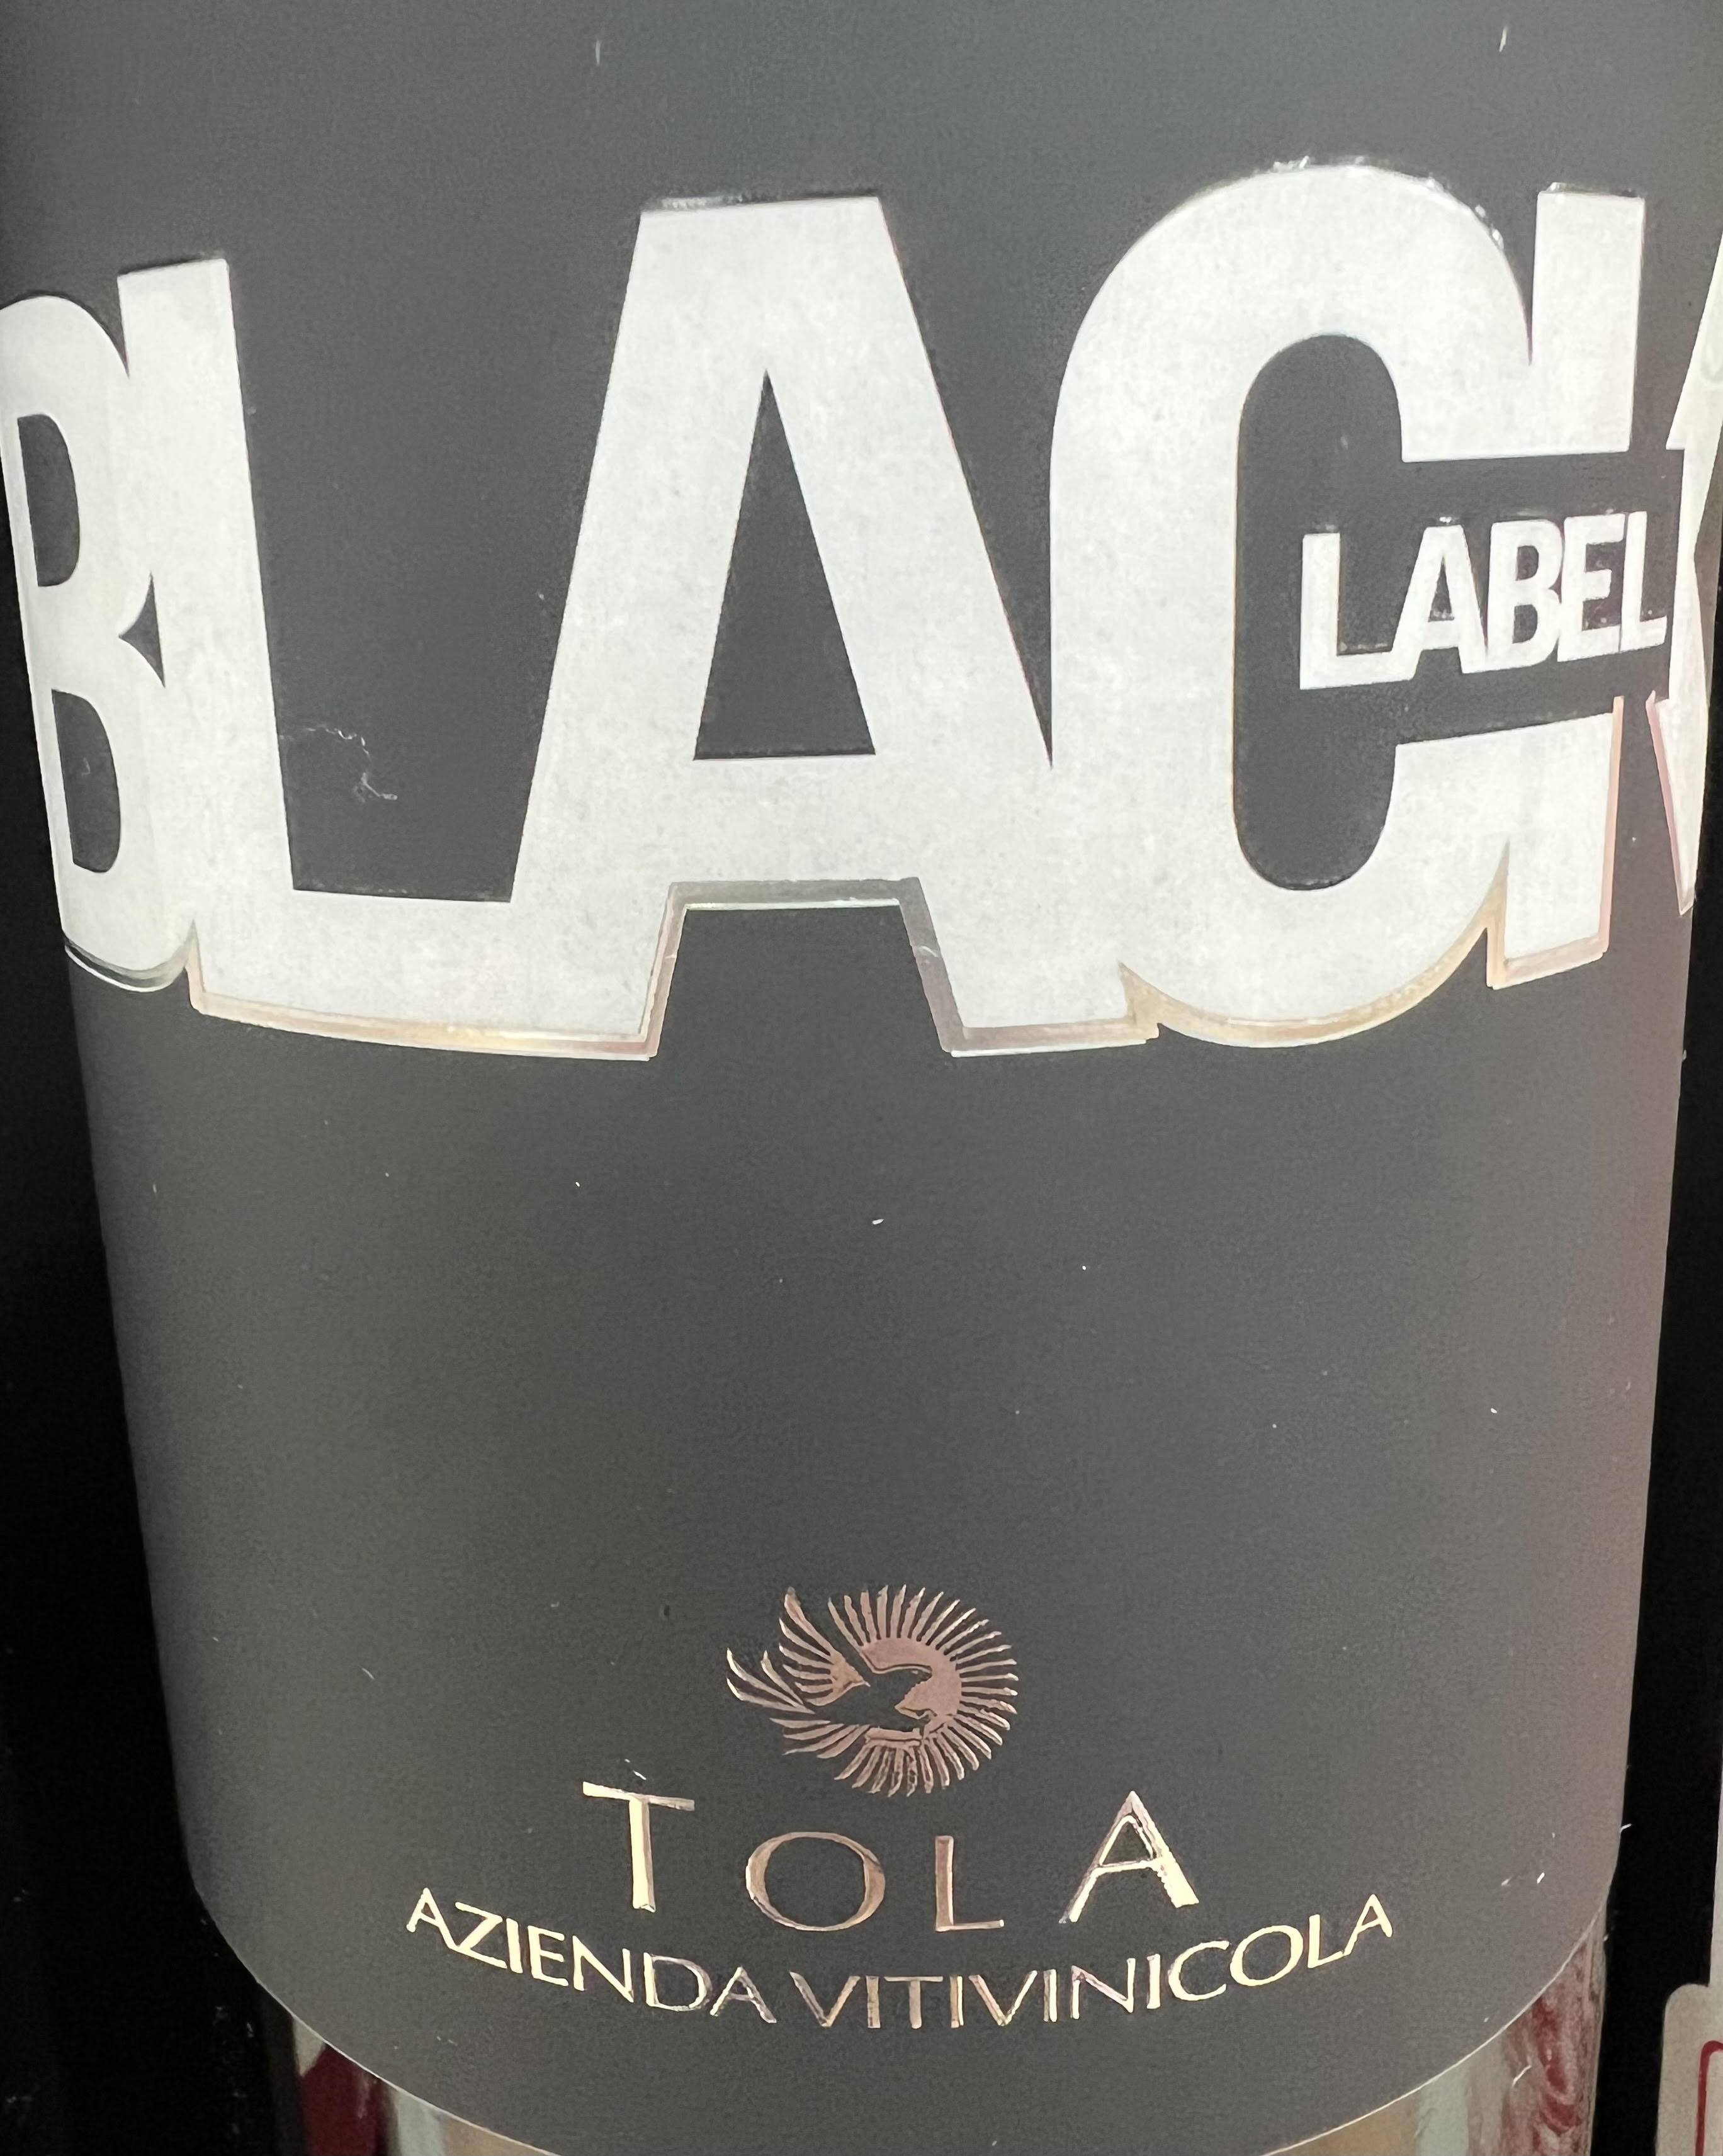 Tola Black Label 2017